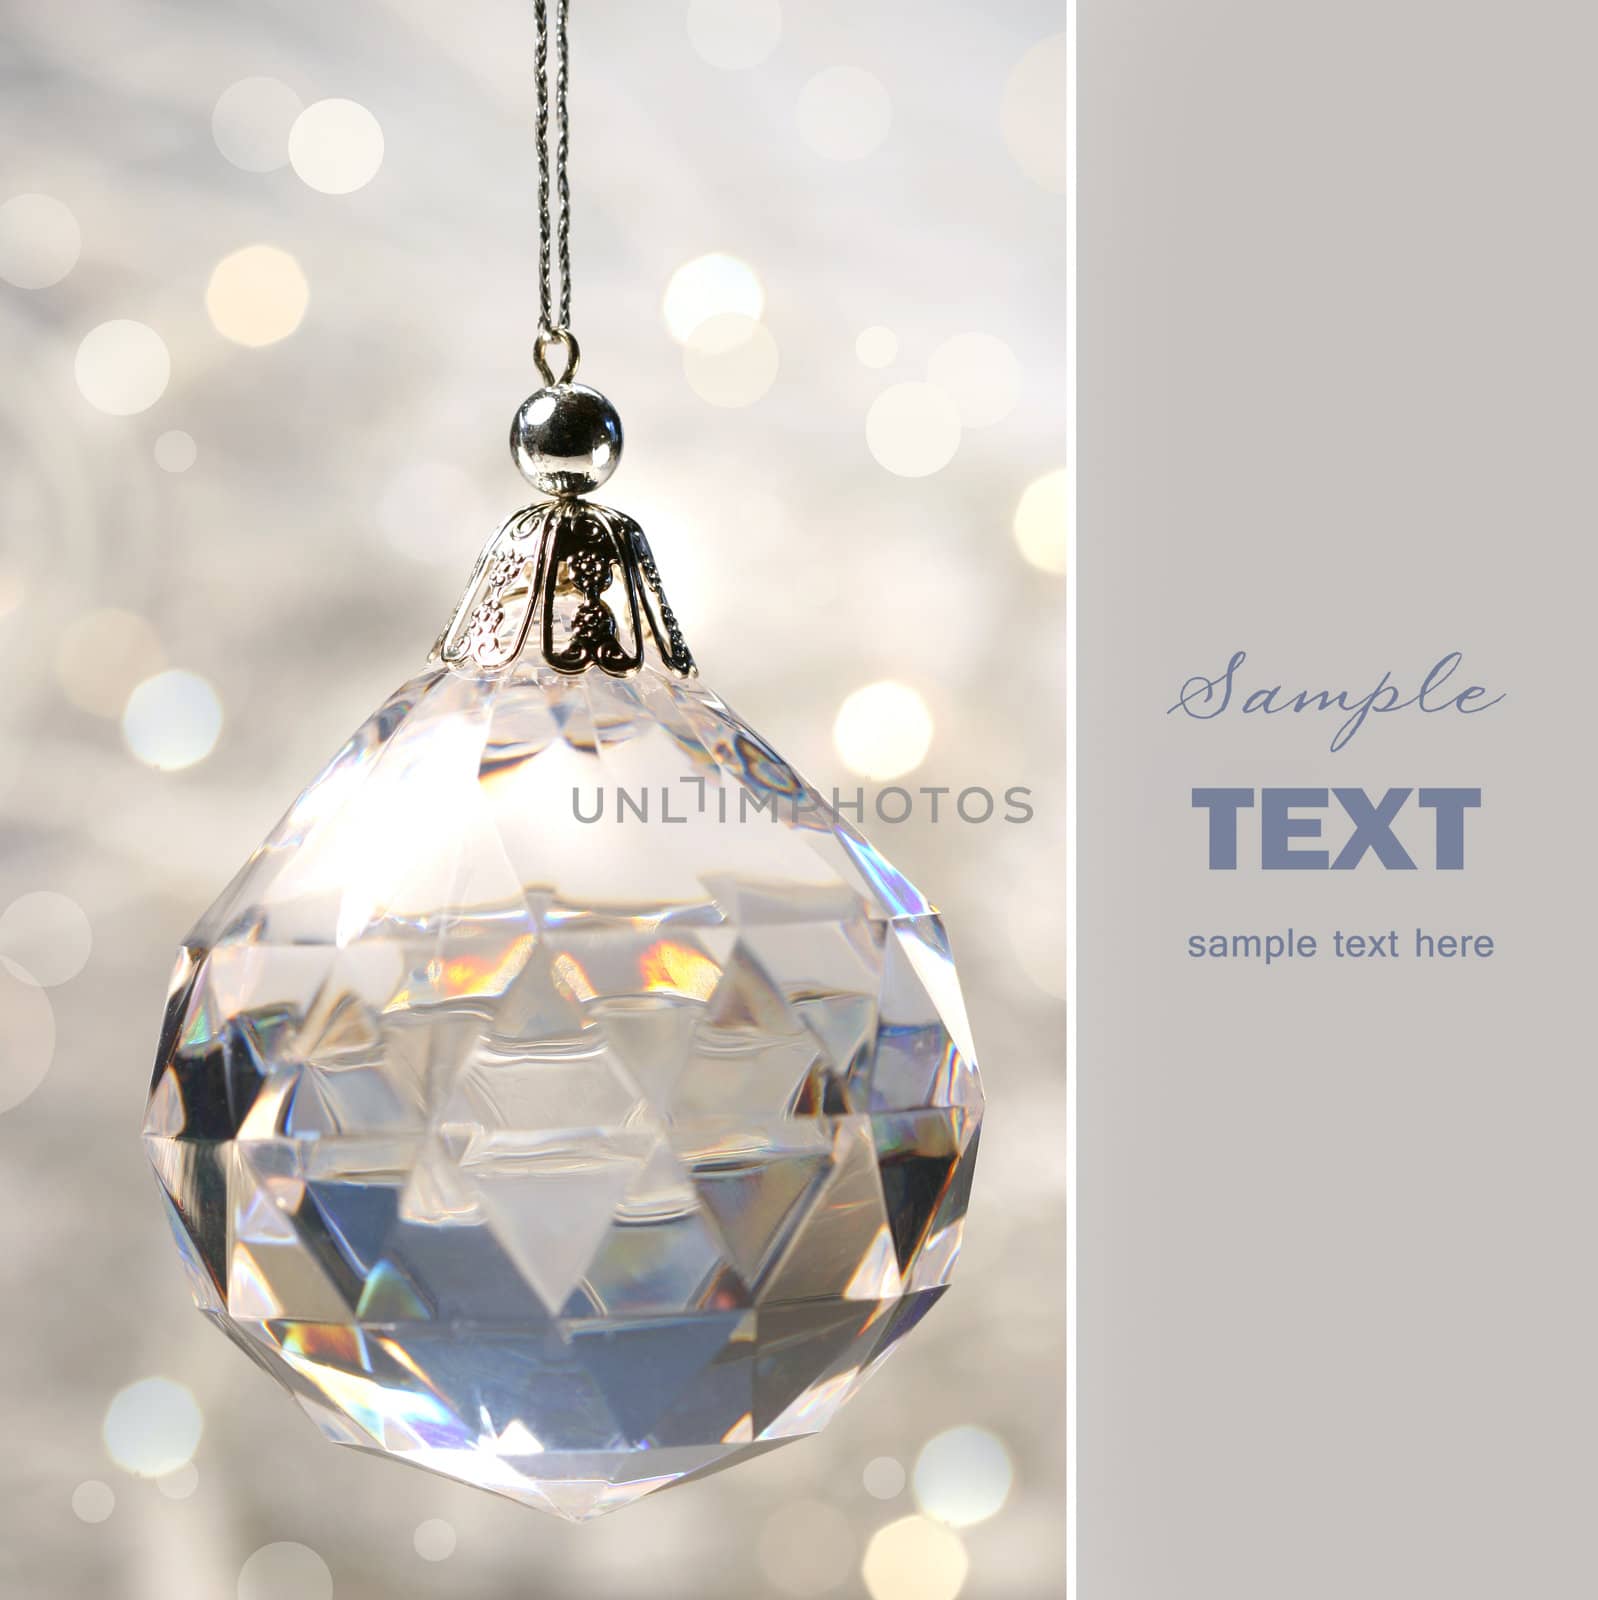 Crystal ornament hanging against shimmering background